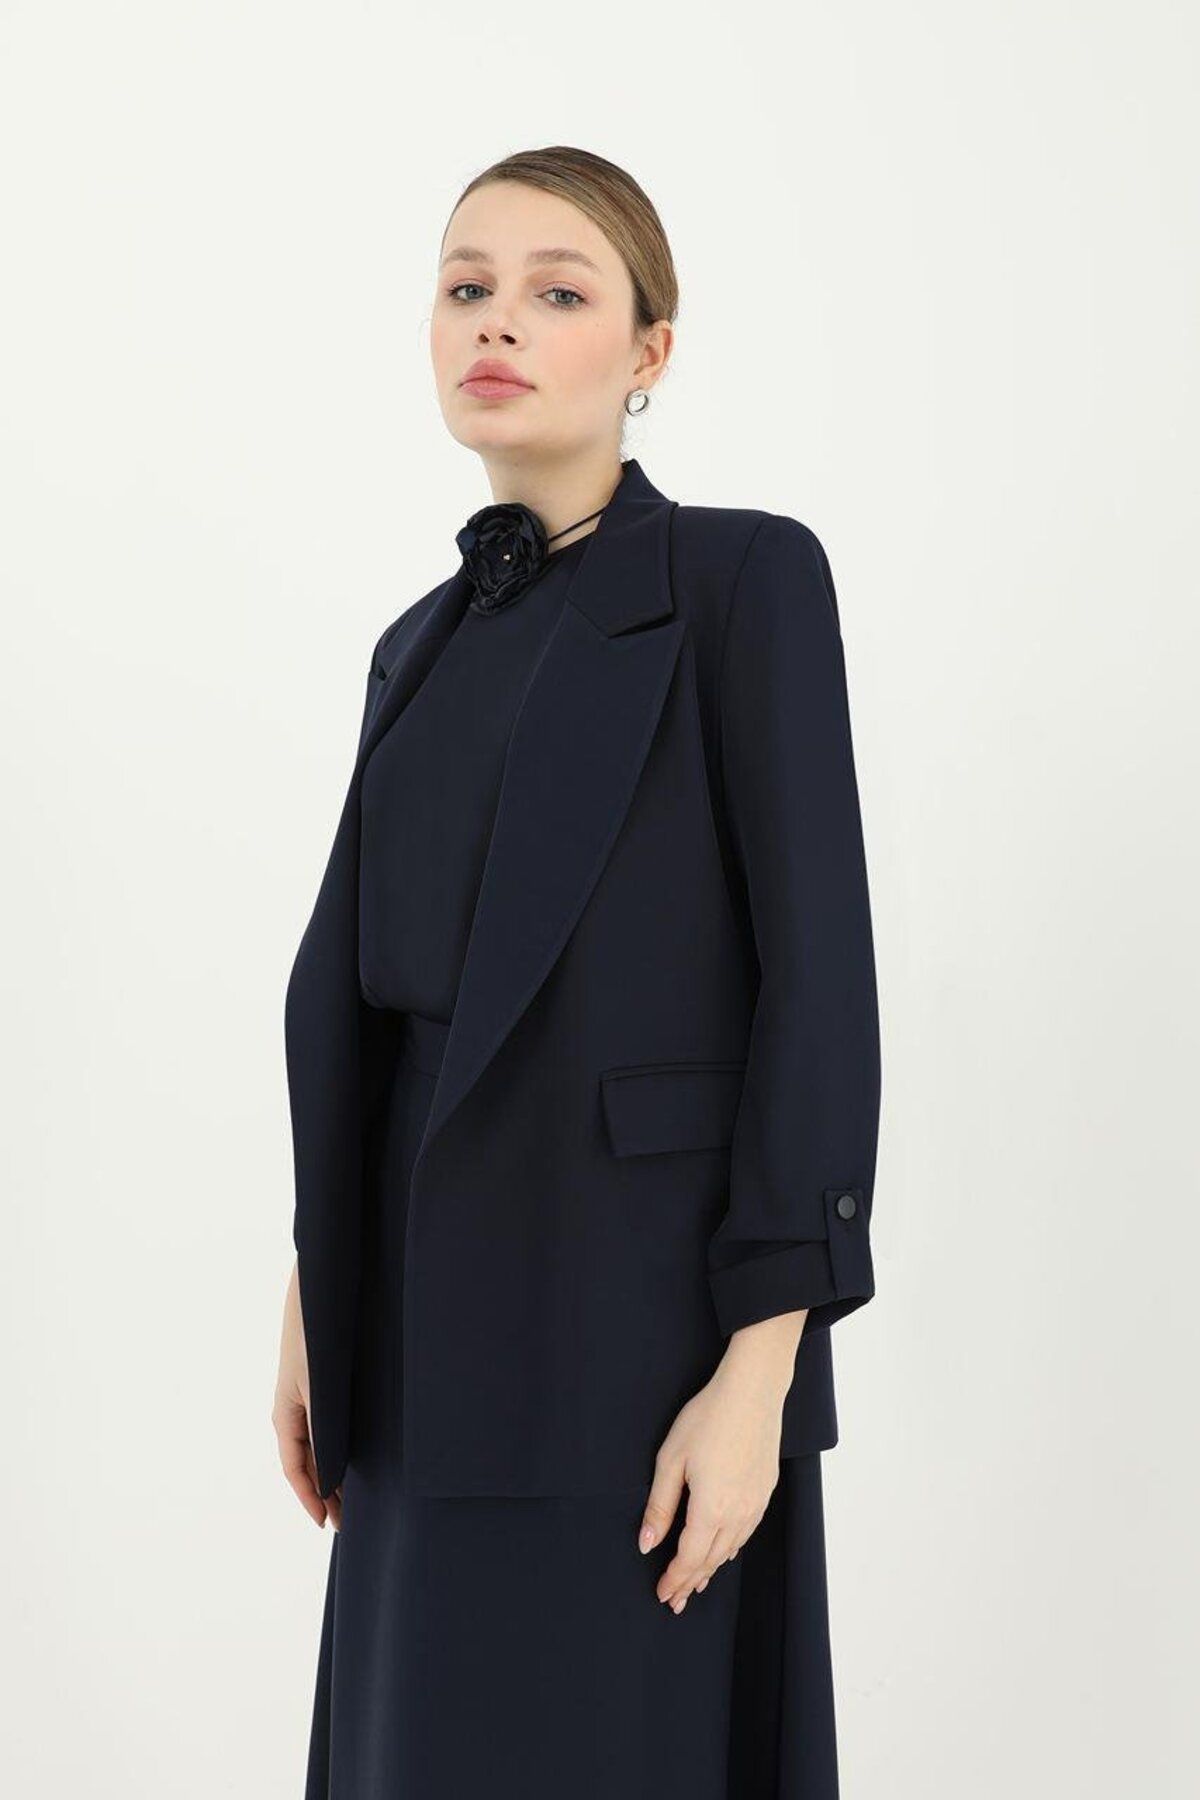 Puane Hscstore Kadın Lacivert Blazer Ceket - 15159